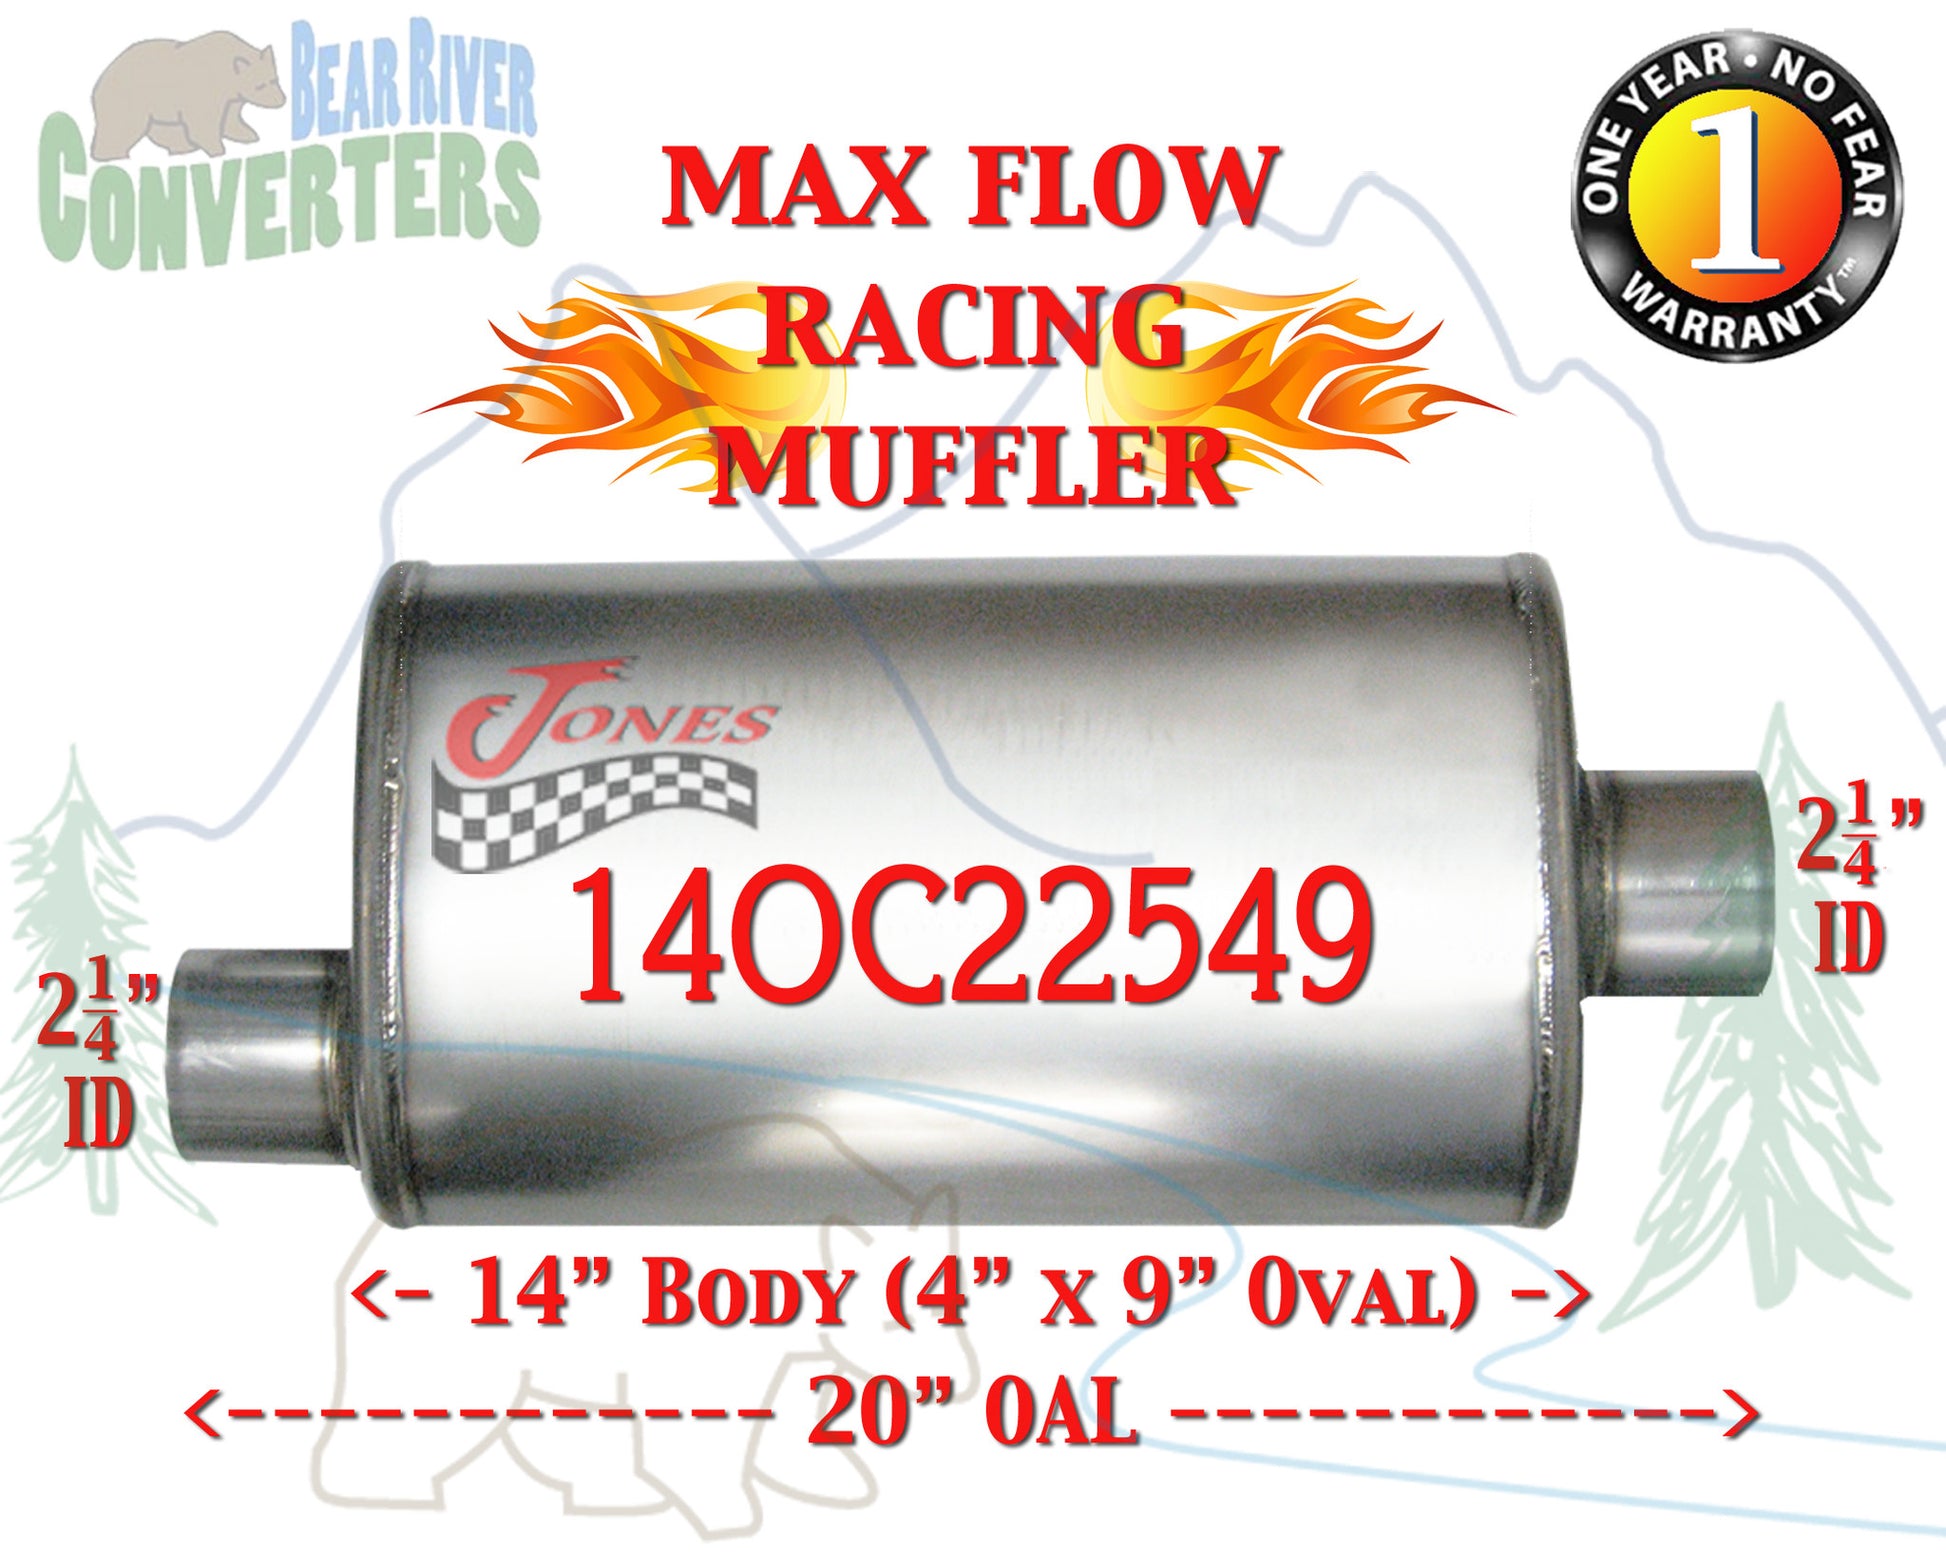 14OC22549 Jones MF1225 Max Flow Racing Muffler 14” Oval Body 2 1/4” 2.25" Pipe Offset/Center 20” OAL - Bear River Converters